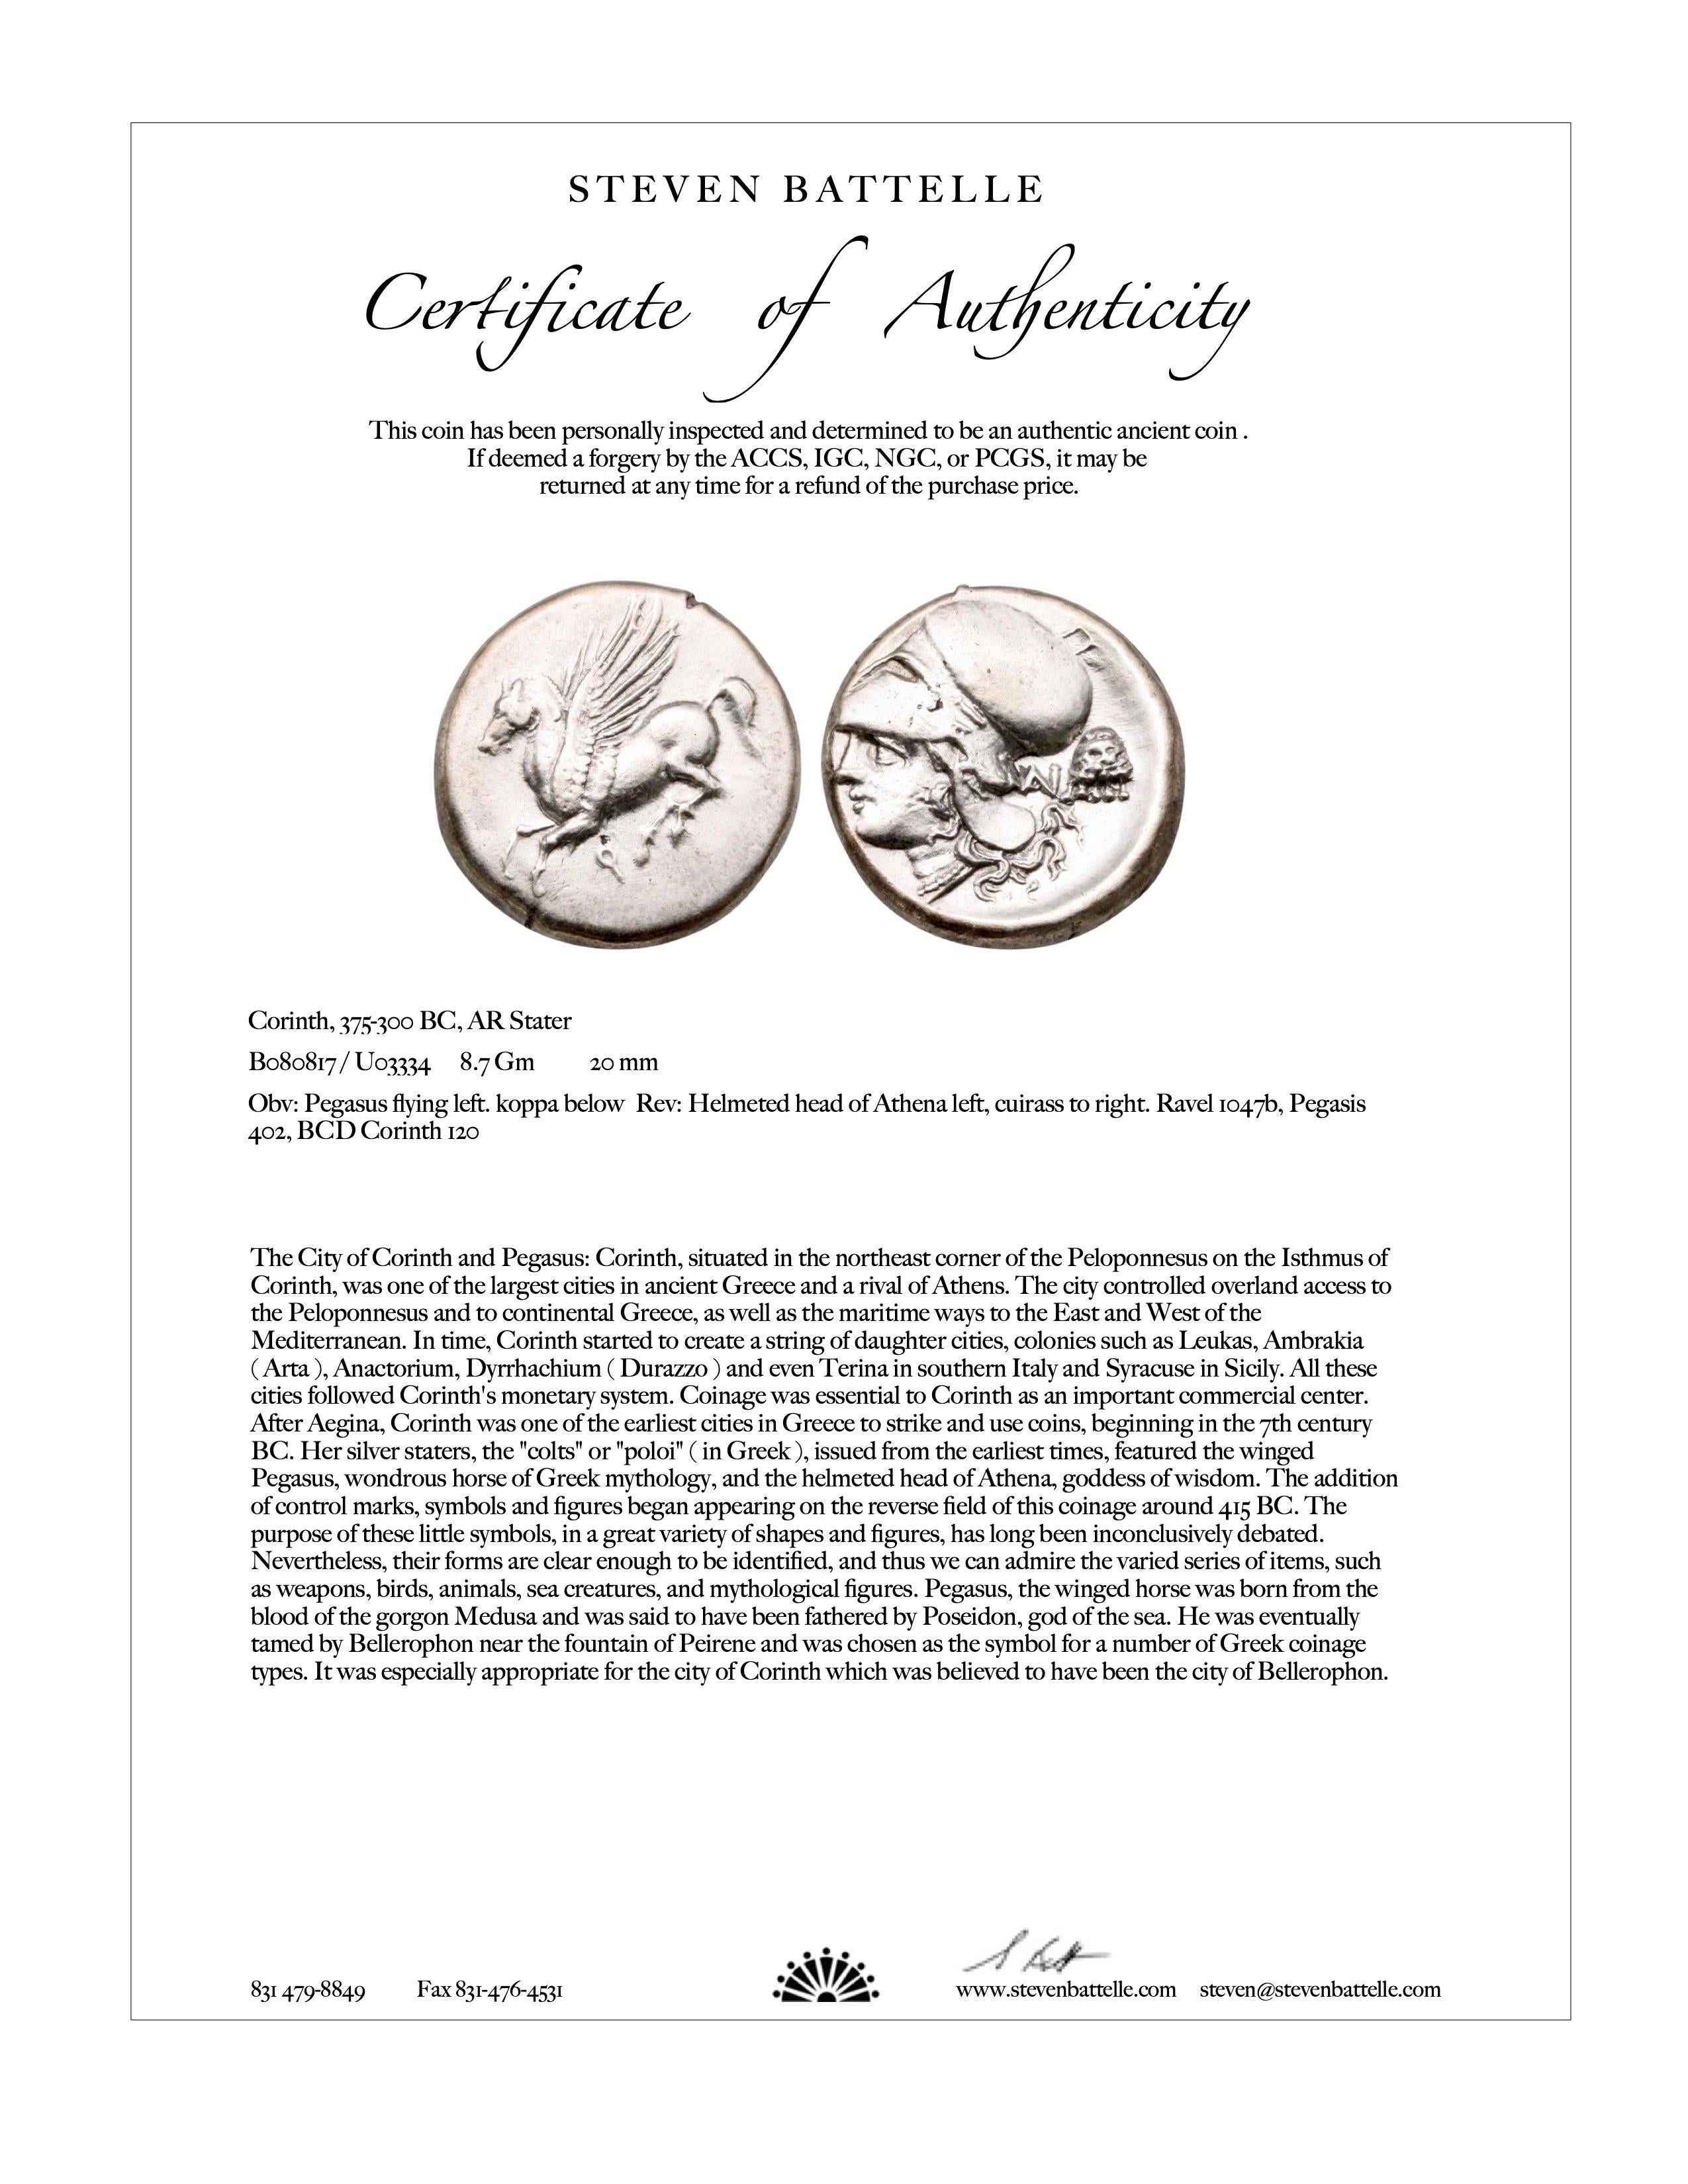 Ancient Greek 4th Century BC Pegasus Coin Diamond 22K Gold Pendant 22